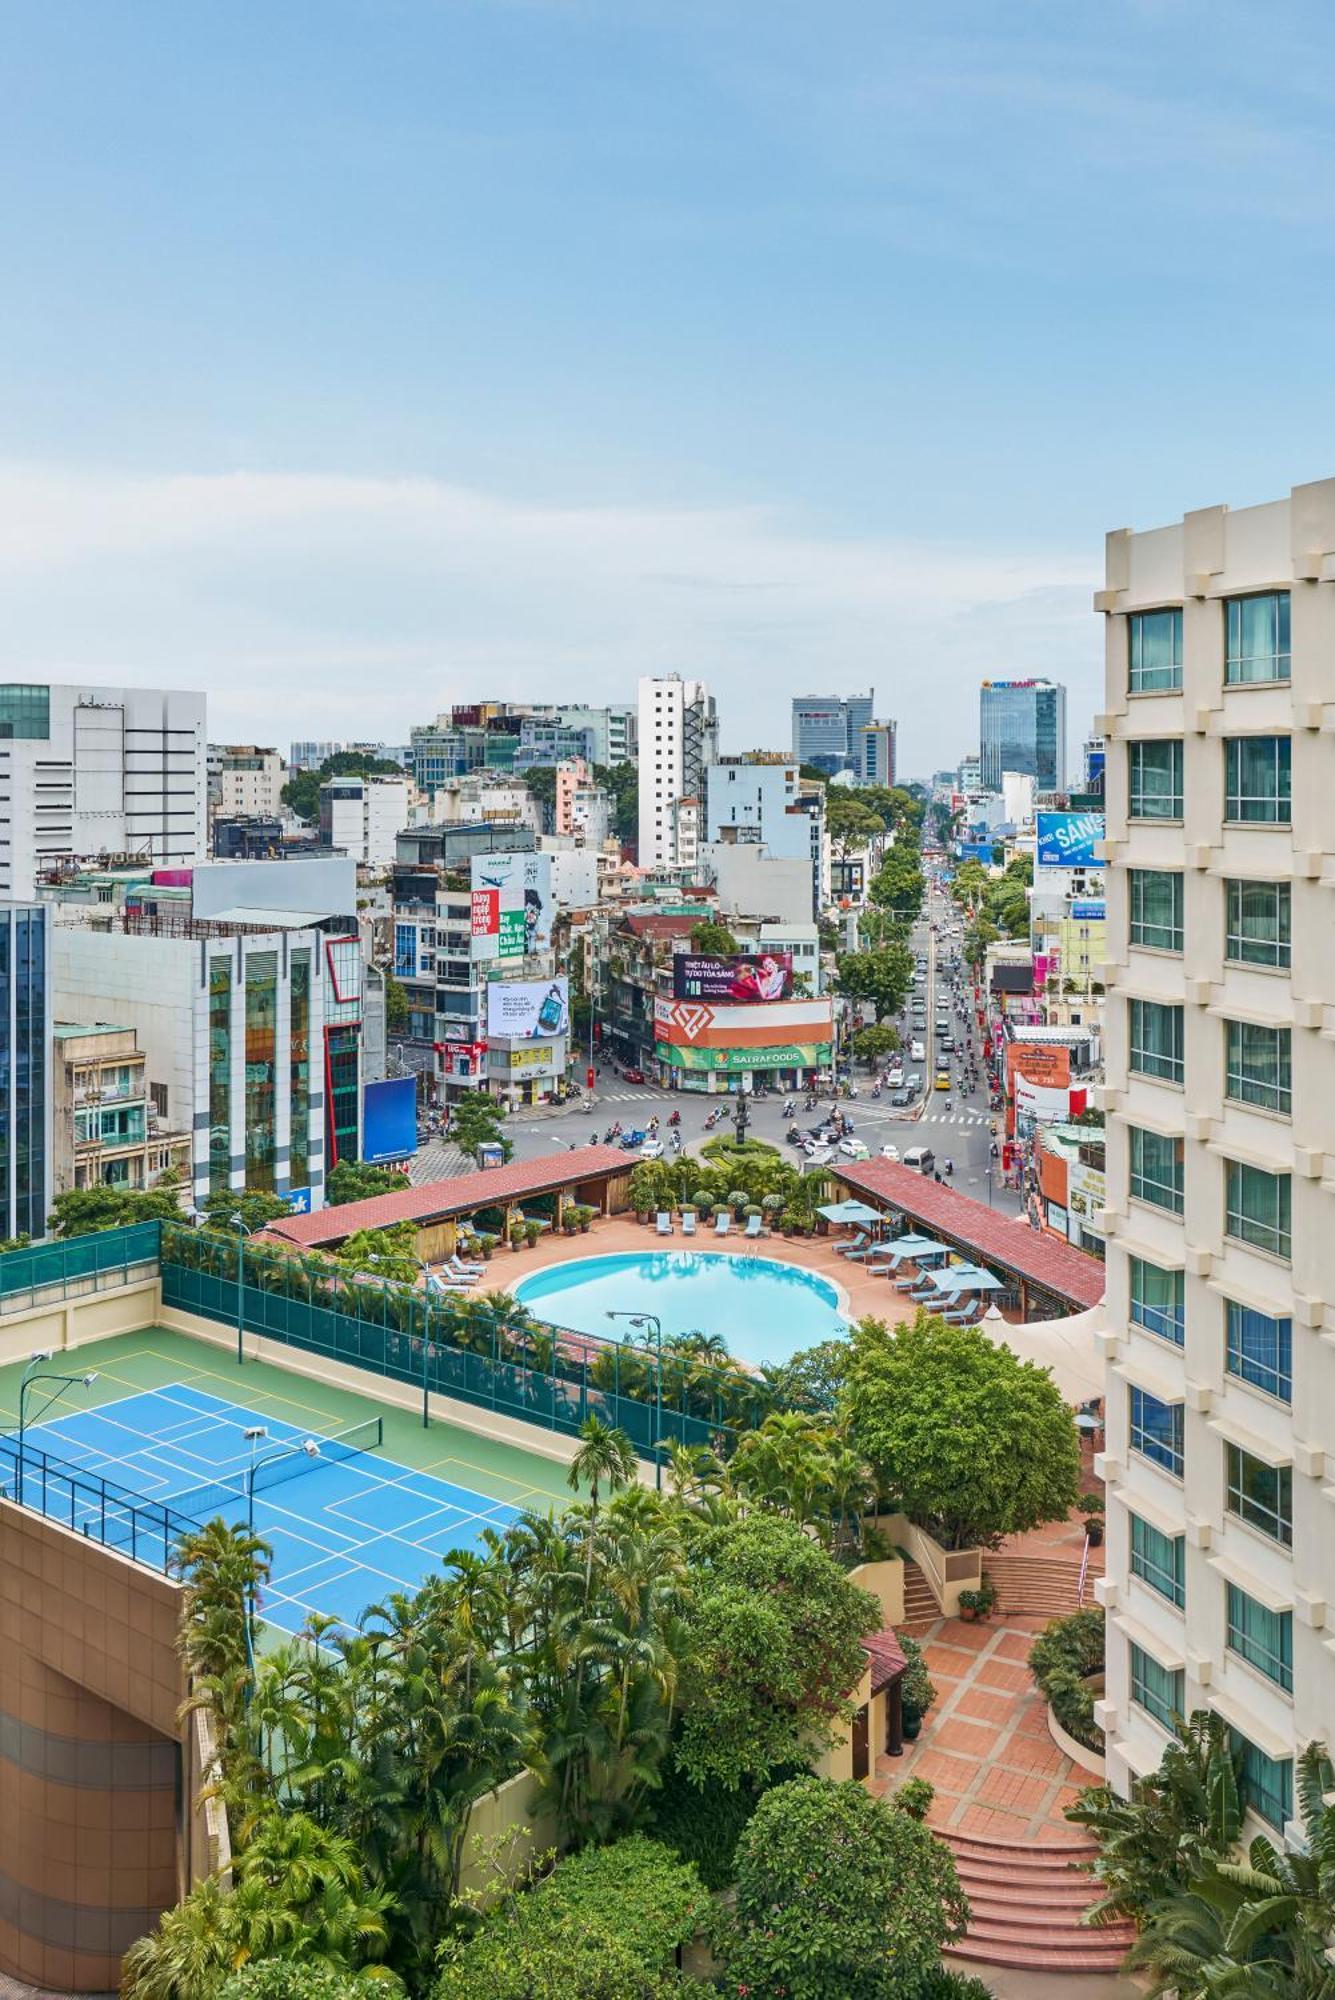 New World Saigon Hotel Хошимин Экстерьер фото